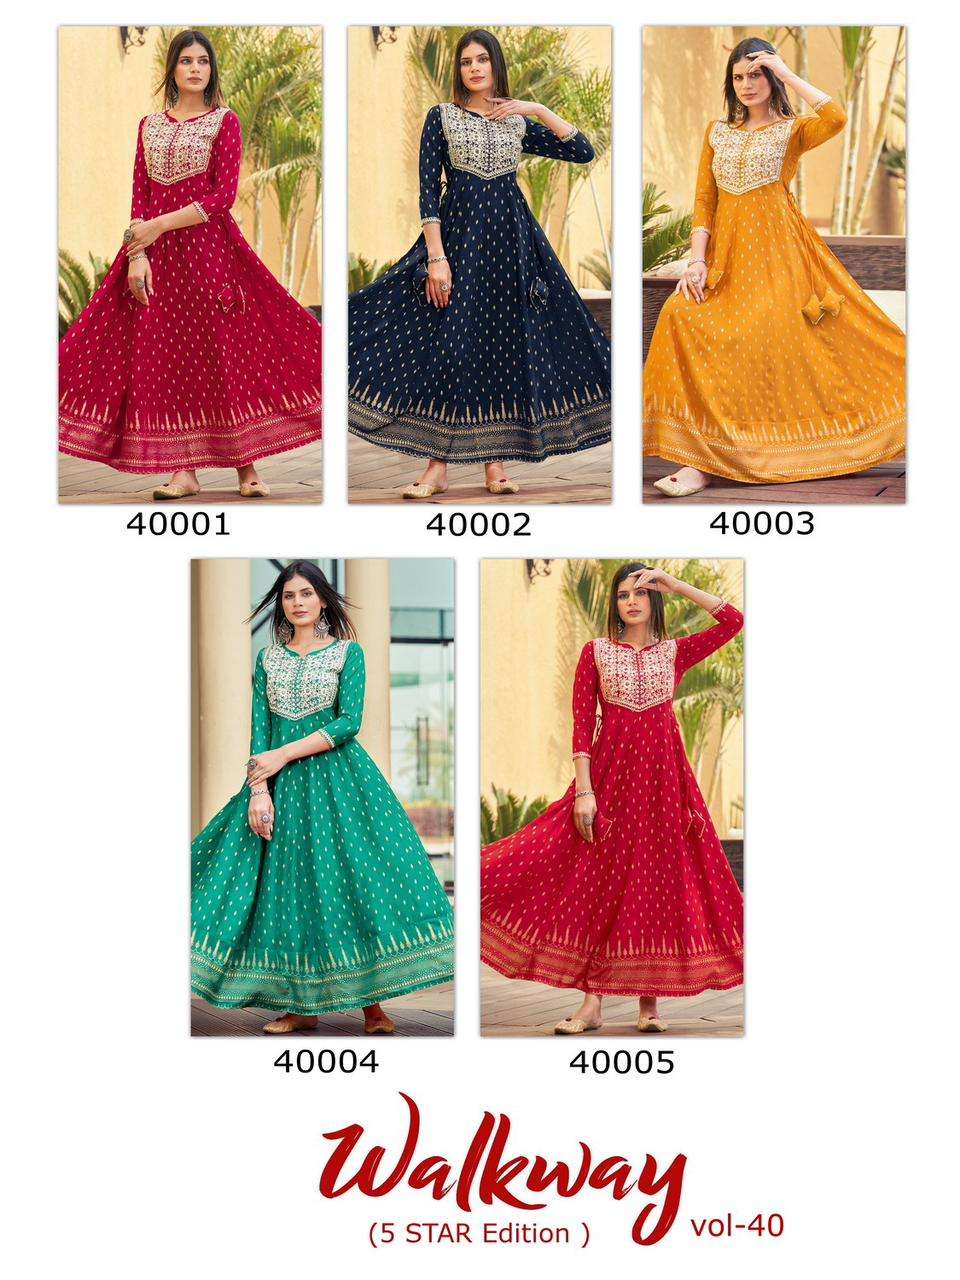  maa gurujee walkway vol-40 40001-40005 series floor legth gown at wholesale price surat gujarat